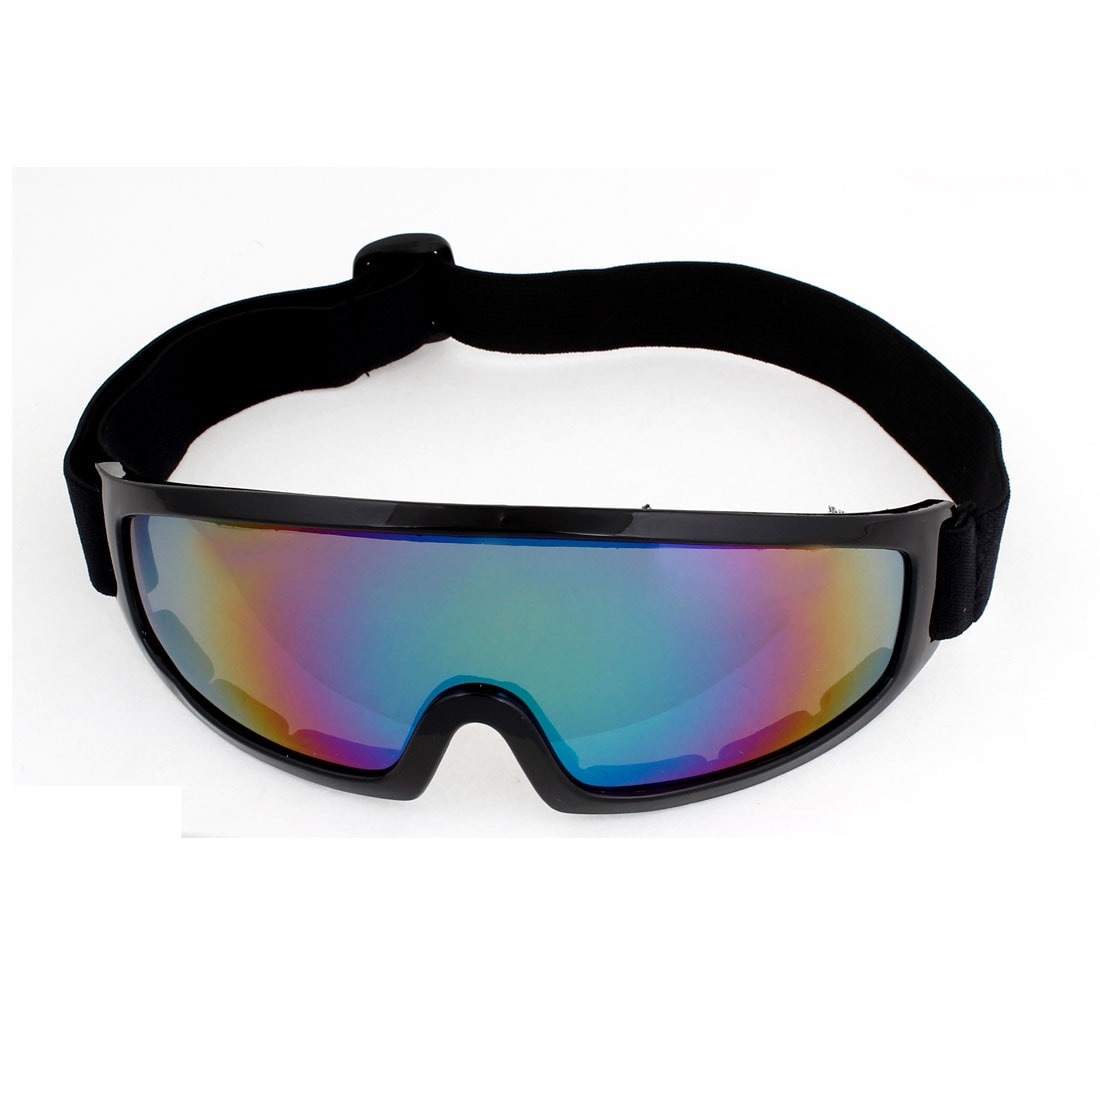 Unisex Black Colorful - Rim - Lens & Beyond Unique 17608183 Bed Outdoor Sports Eyeglasses Bath Ski Goggles Bargains Eyewear